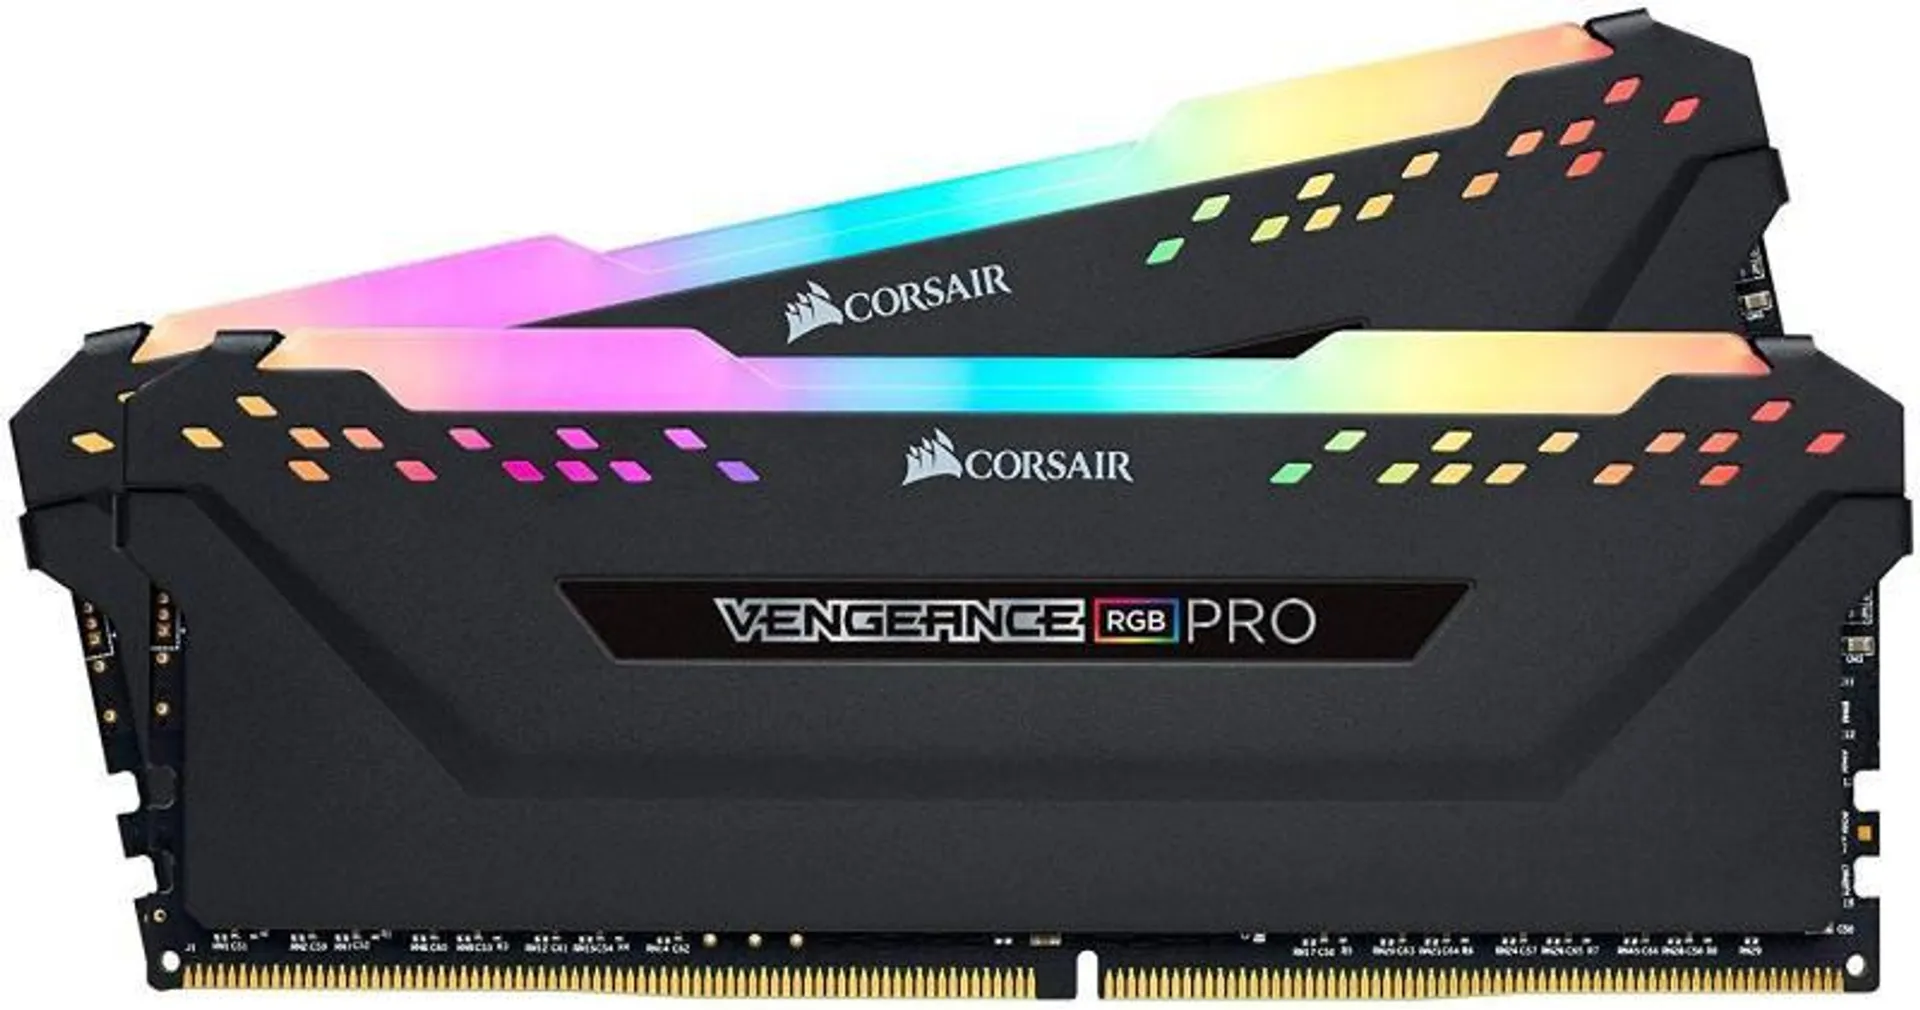 CORSAIR VENGEANCE RGB PRO 16GB DDR4 3600MHz Desktop Memory for Gaming